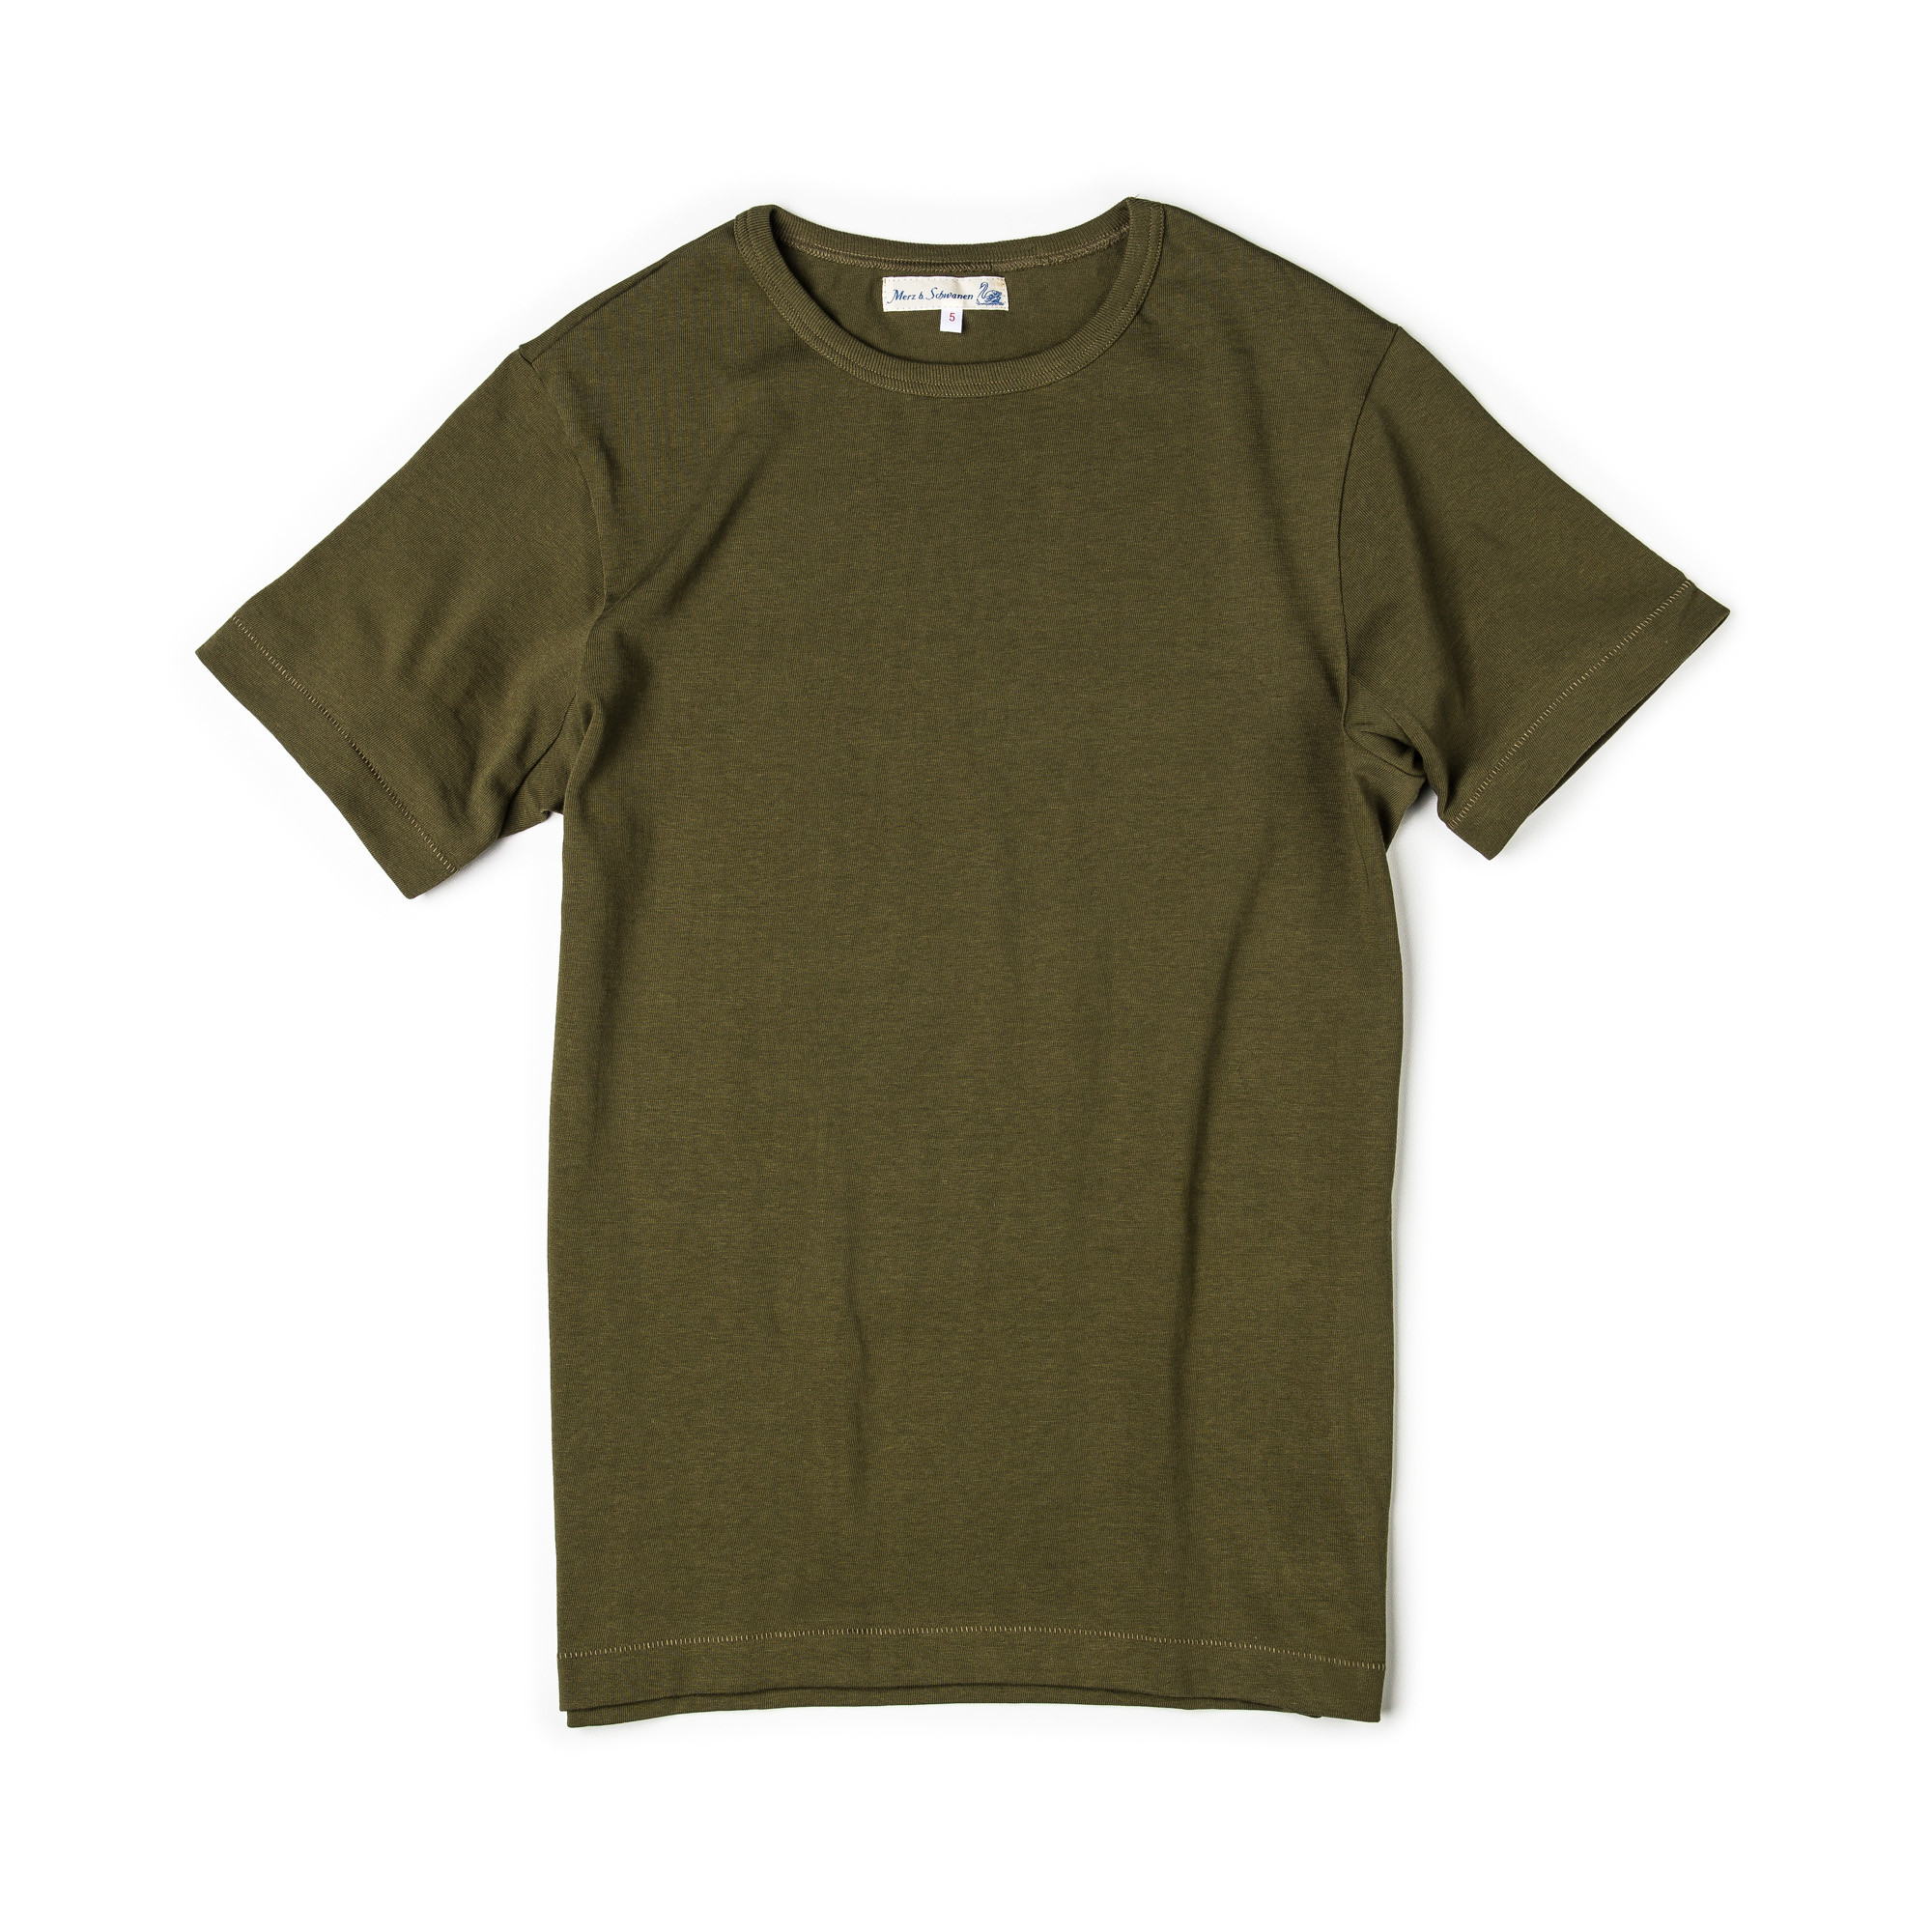 Merz b. Schwanen - 215 Army Shirt - Army Green